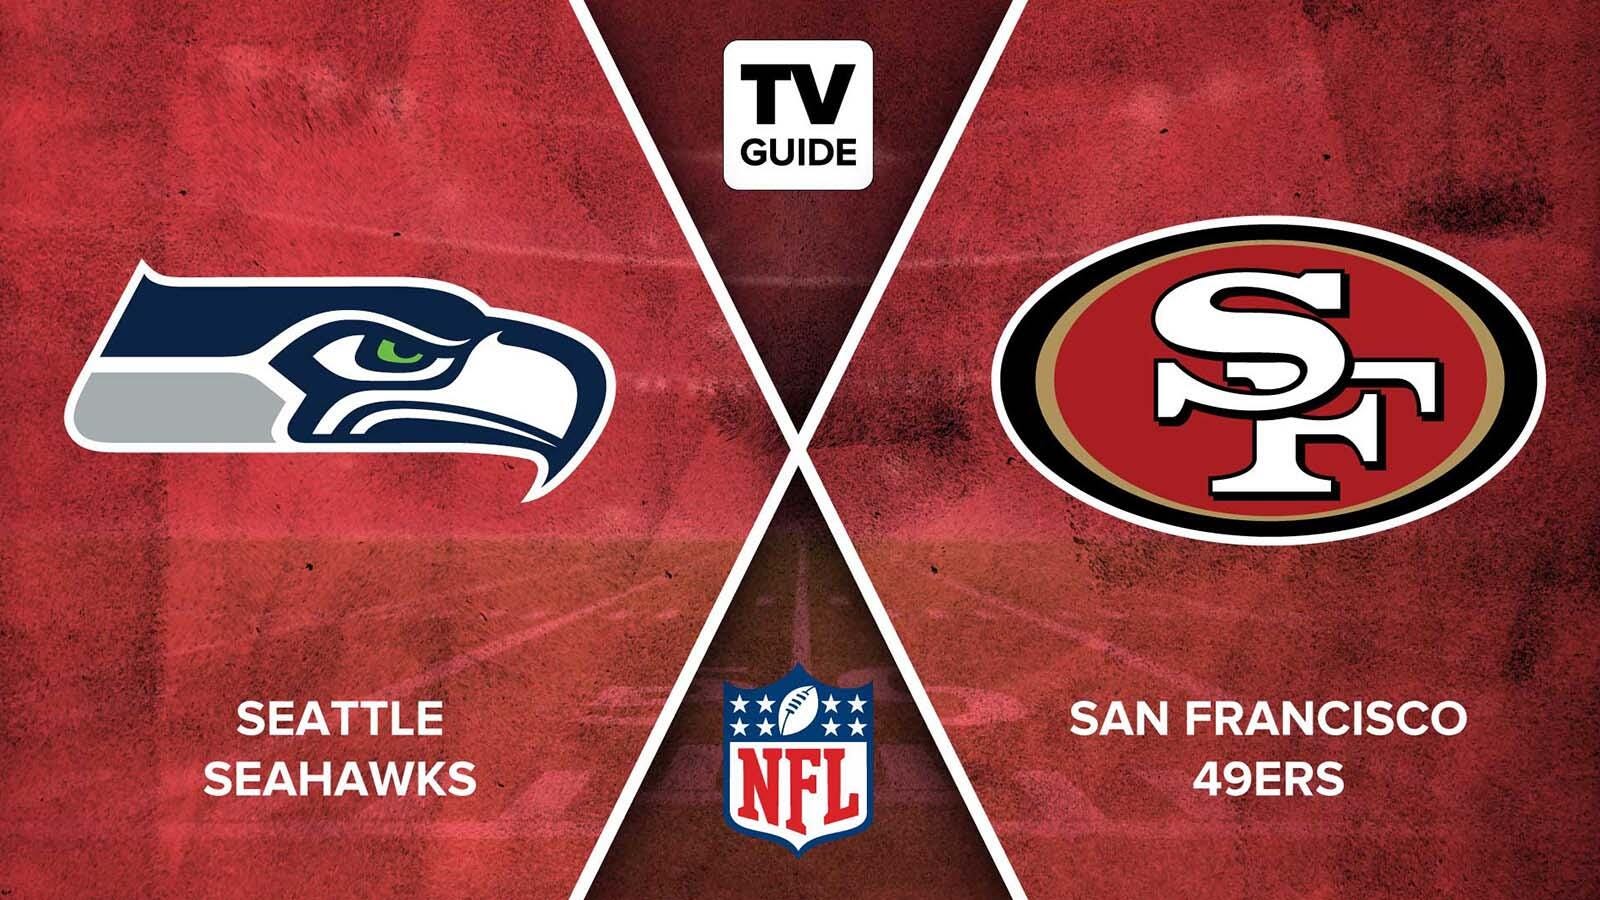 49ers vs seahawks game live